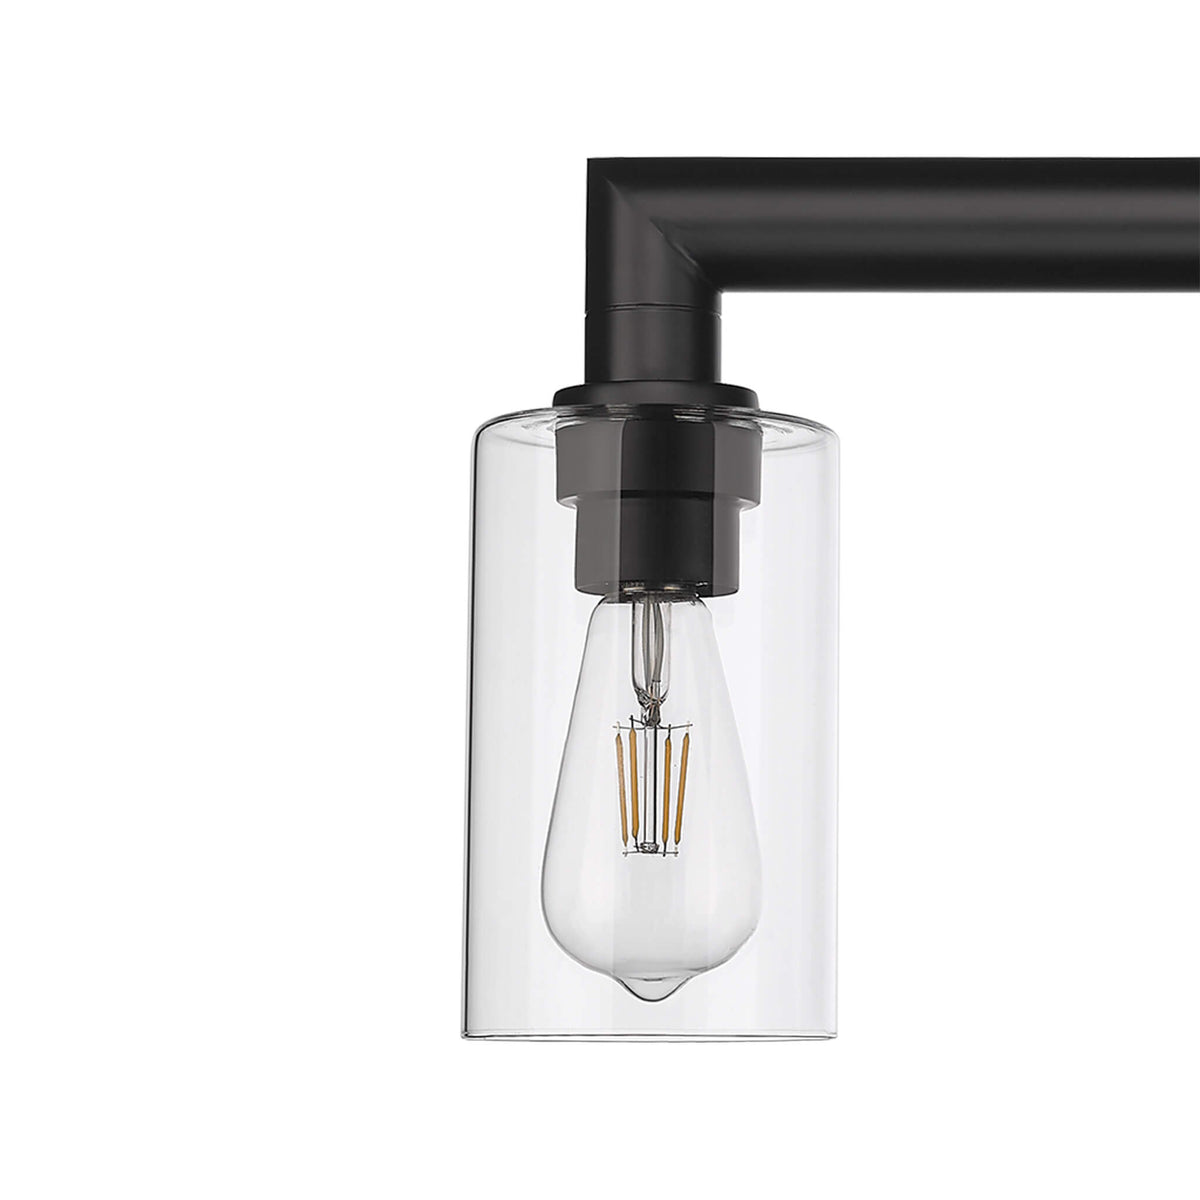 Modern black vanity light fixtures with 3 light - Vivio Lighting